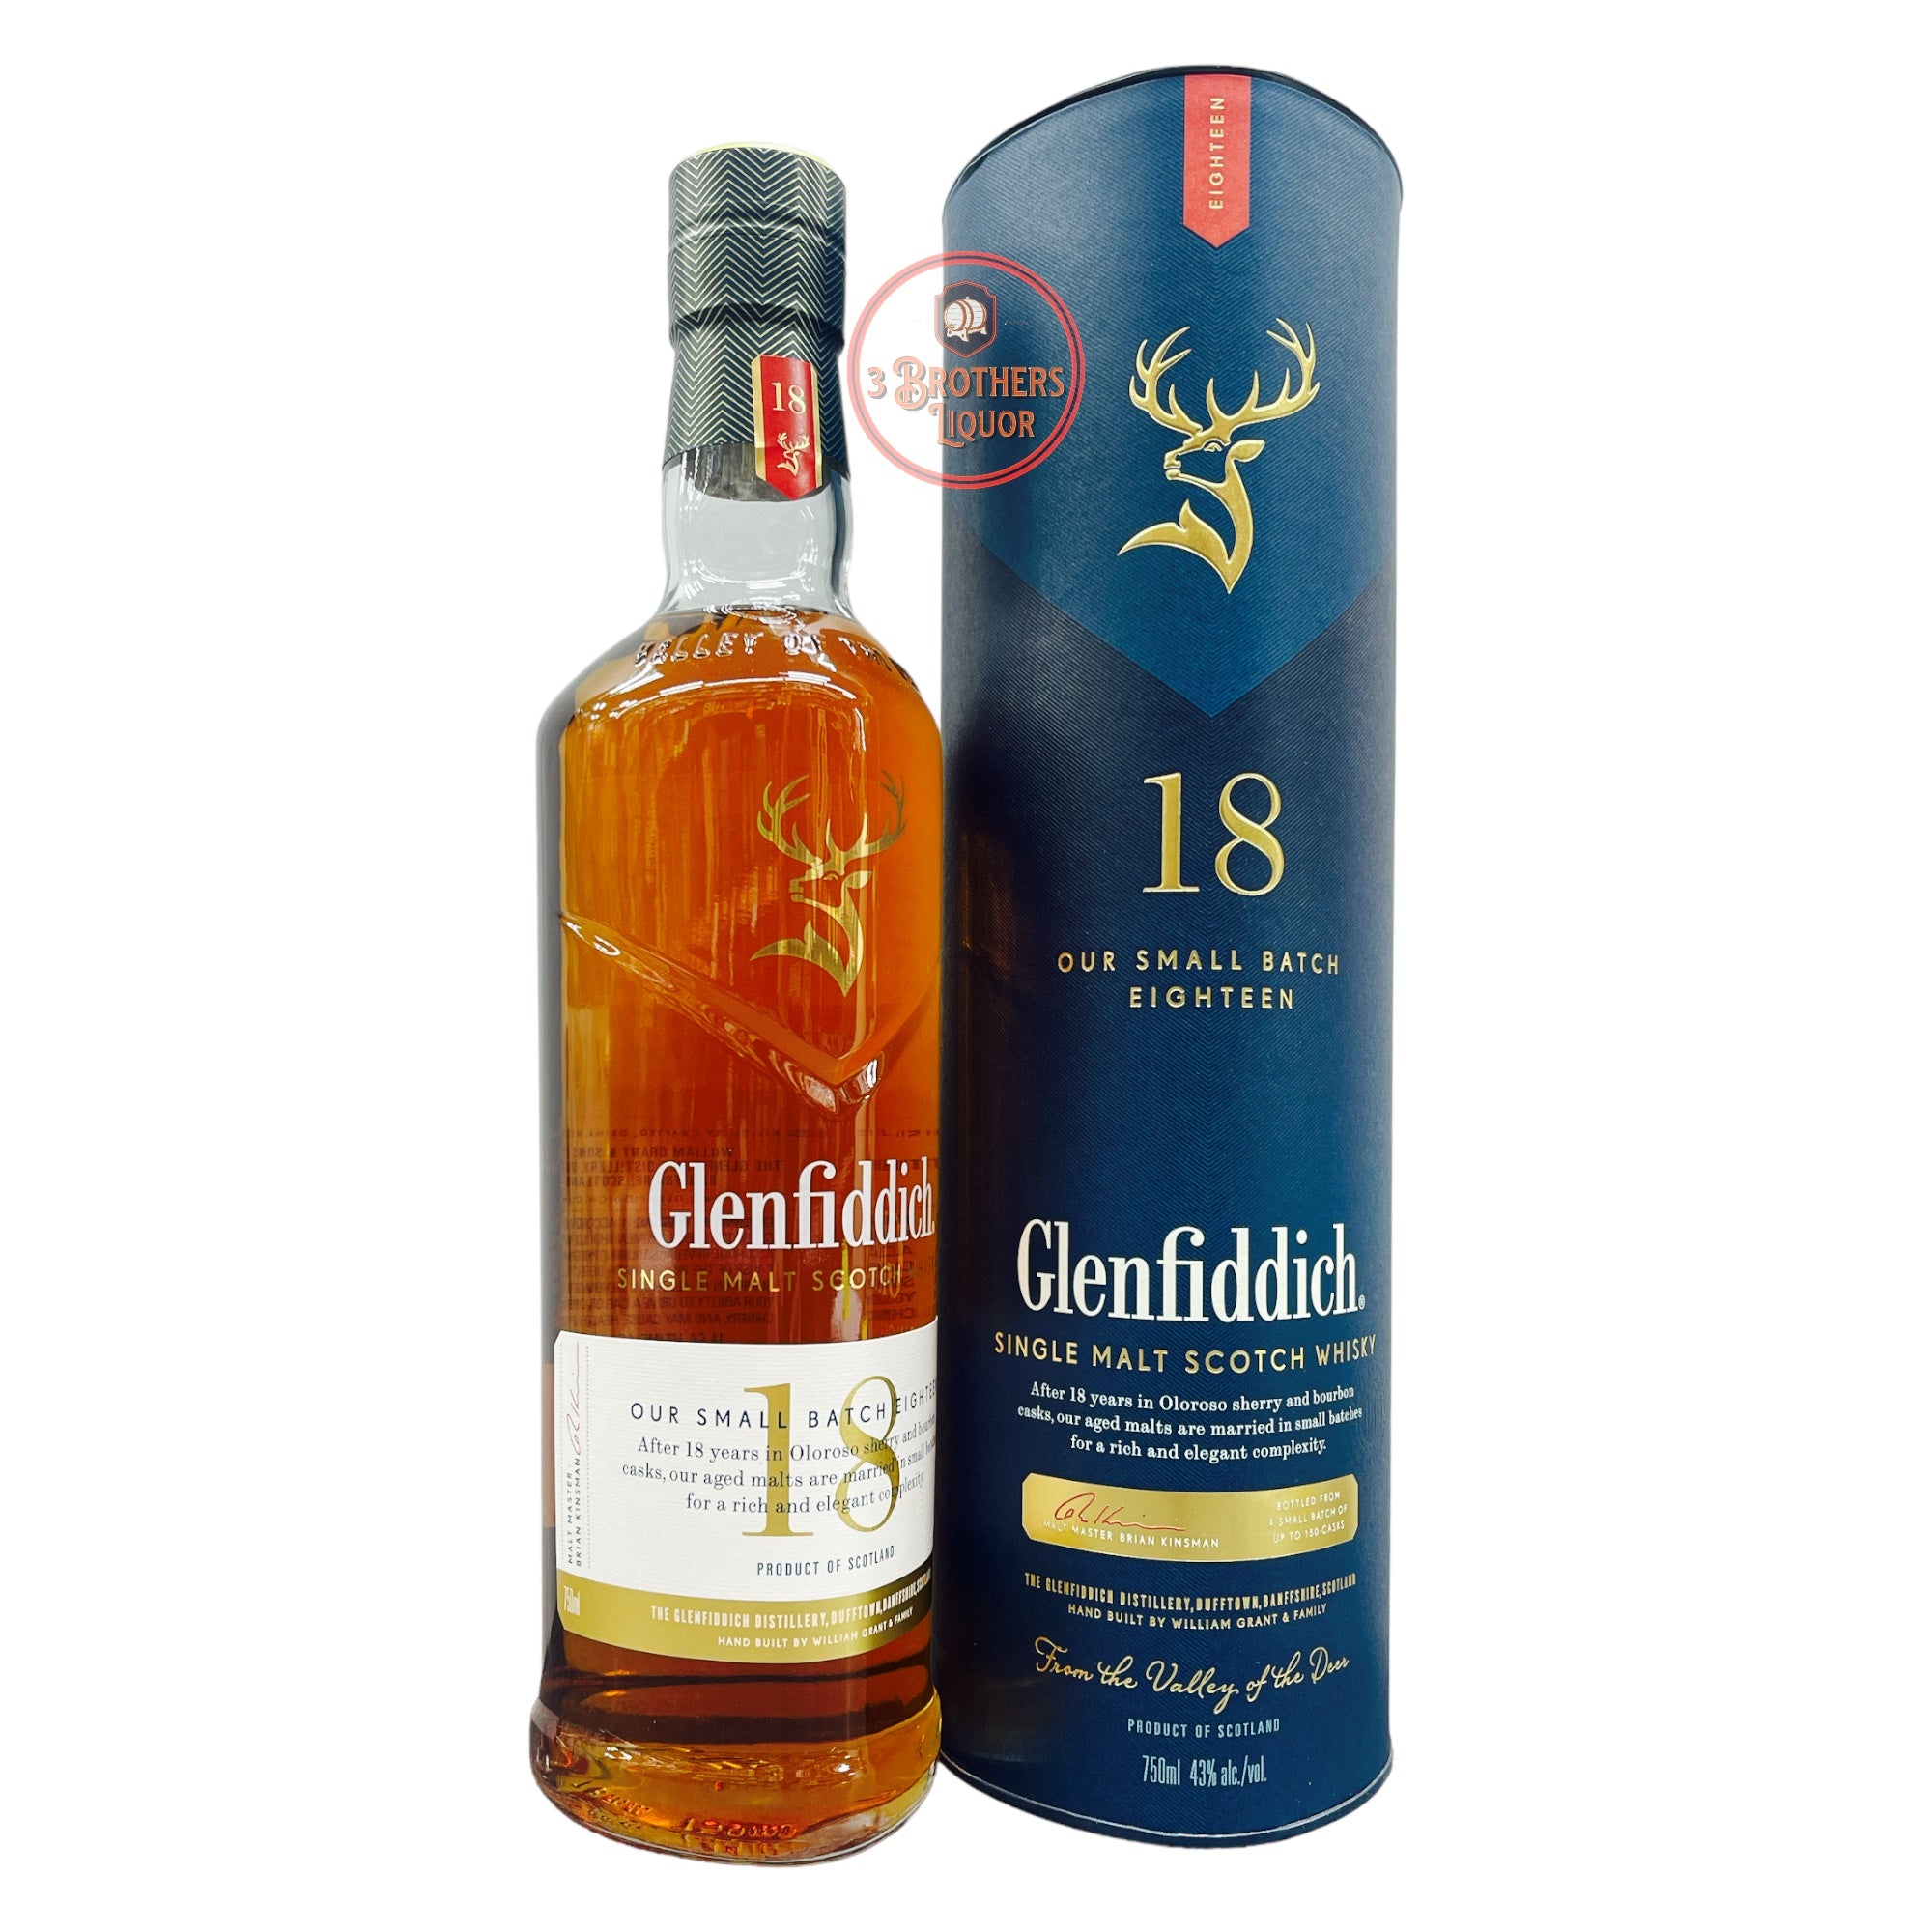 Glenfiddich Aged 18 Years Single Malt Scotch Whisky